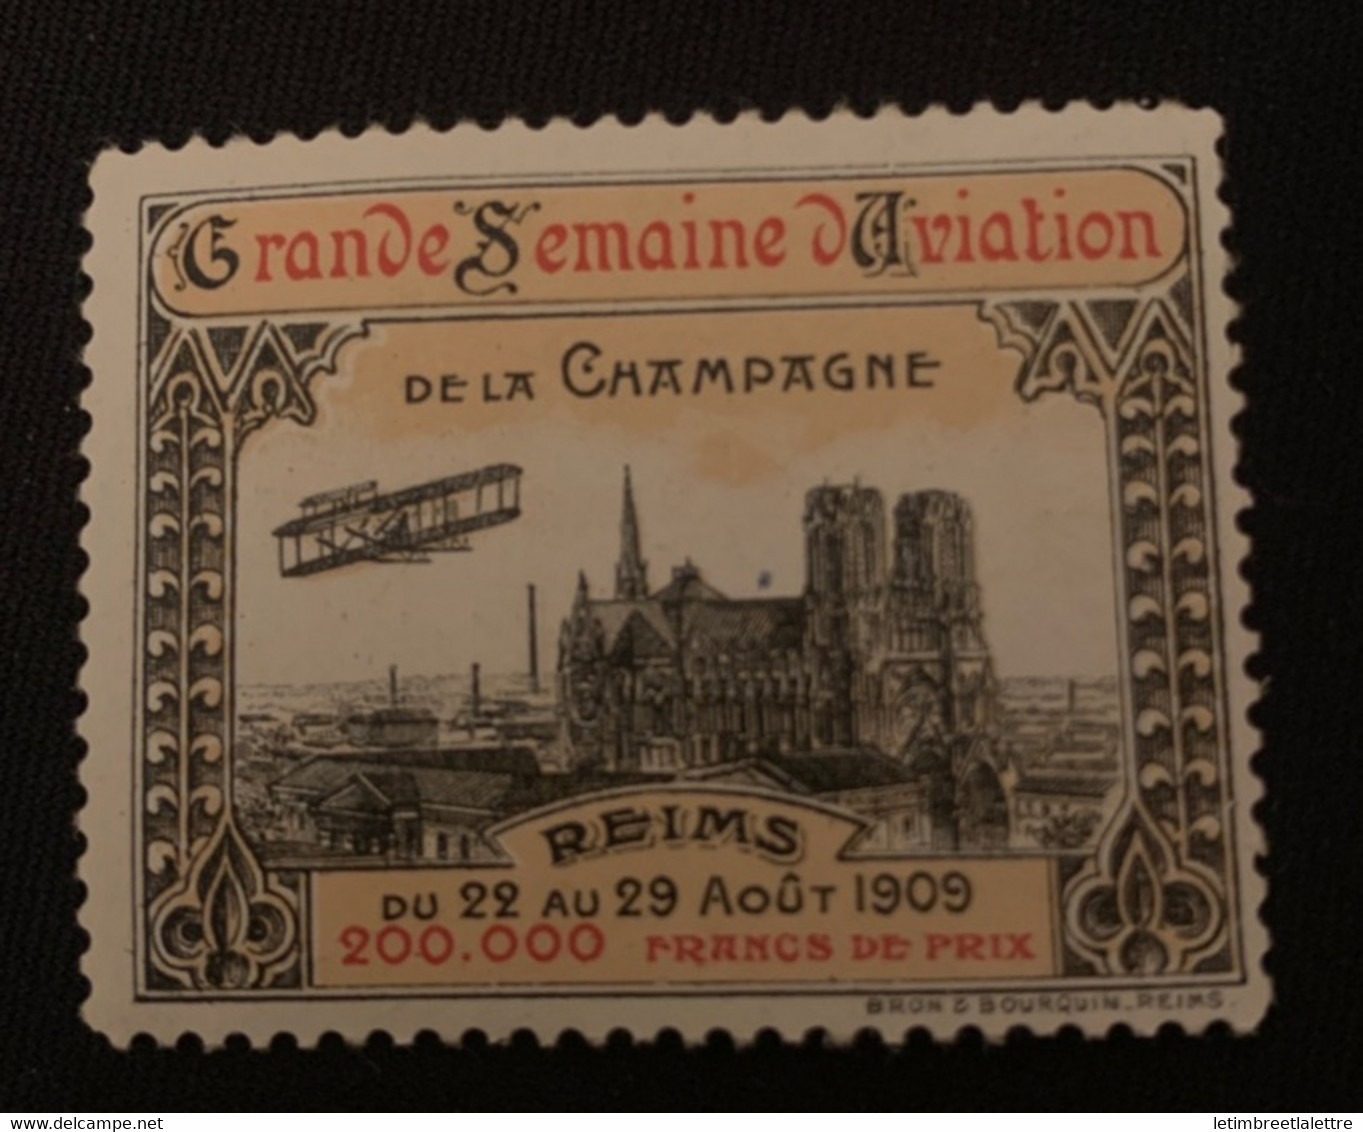 ⭐ France - Vignette - Grande Semaine D’aviation De La Campagne - Reims 1909 ⭐ - Aviación